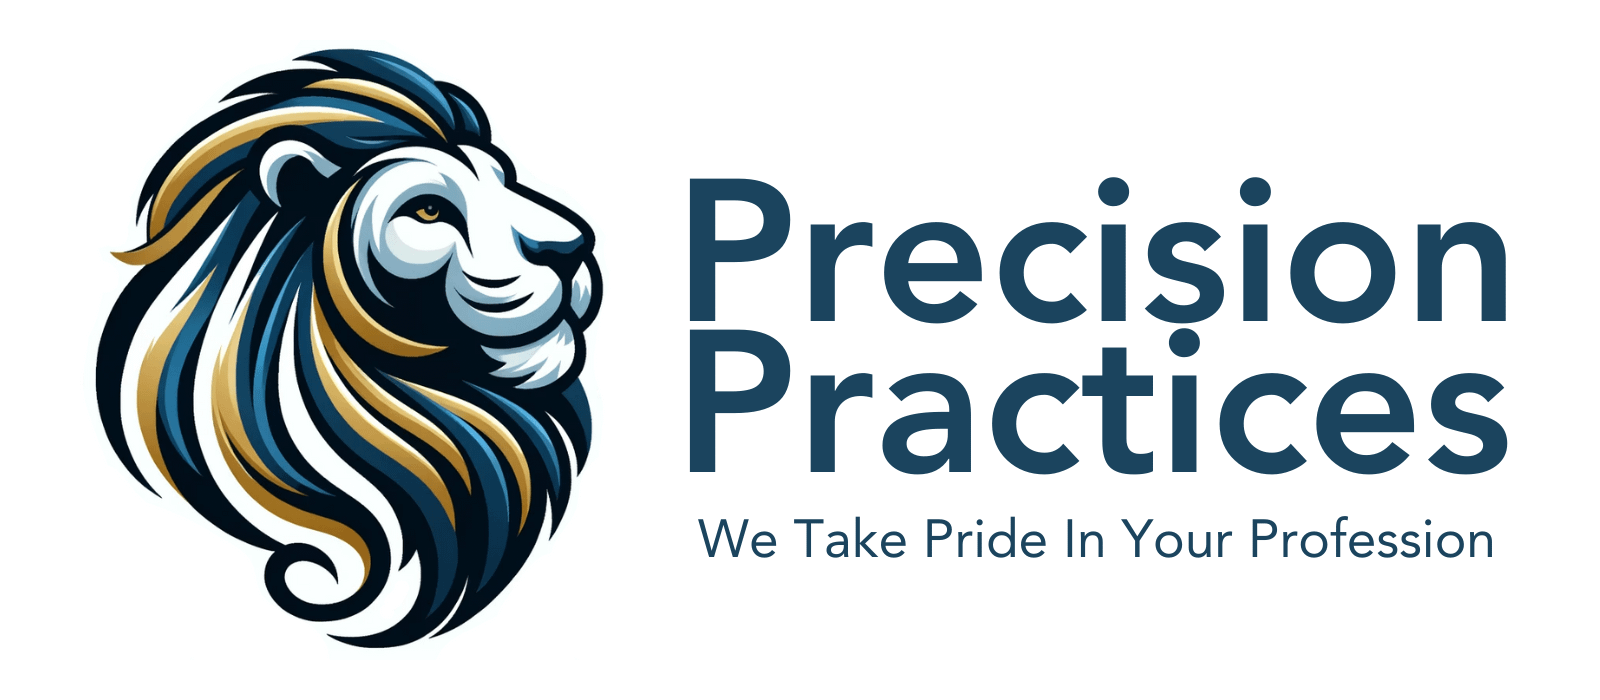 Precision Practices Logo With Tagline